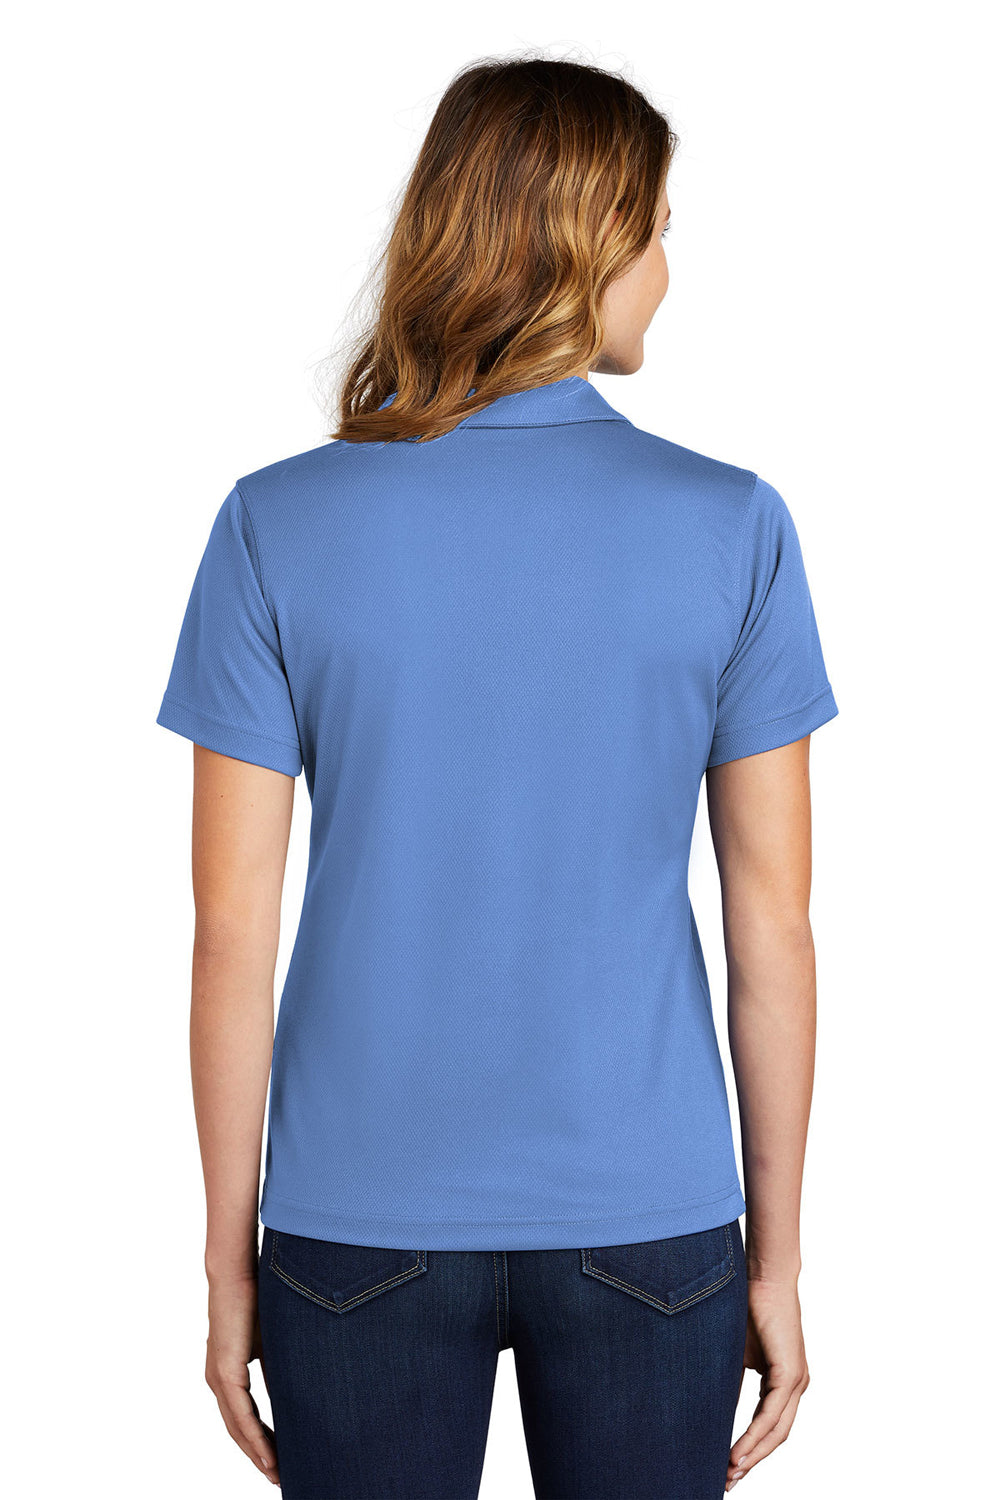 Sport-Tek L469 Womens Dri-Mesh Moisture Wicking Short Sleeve Polo Shirt Blueberry Back